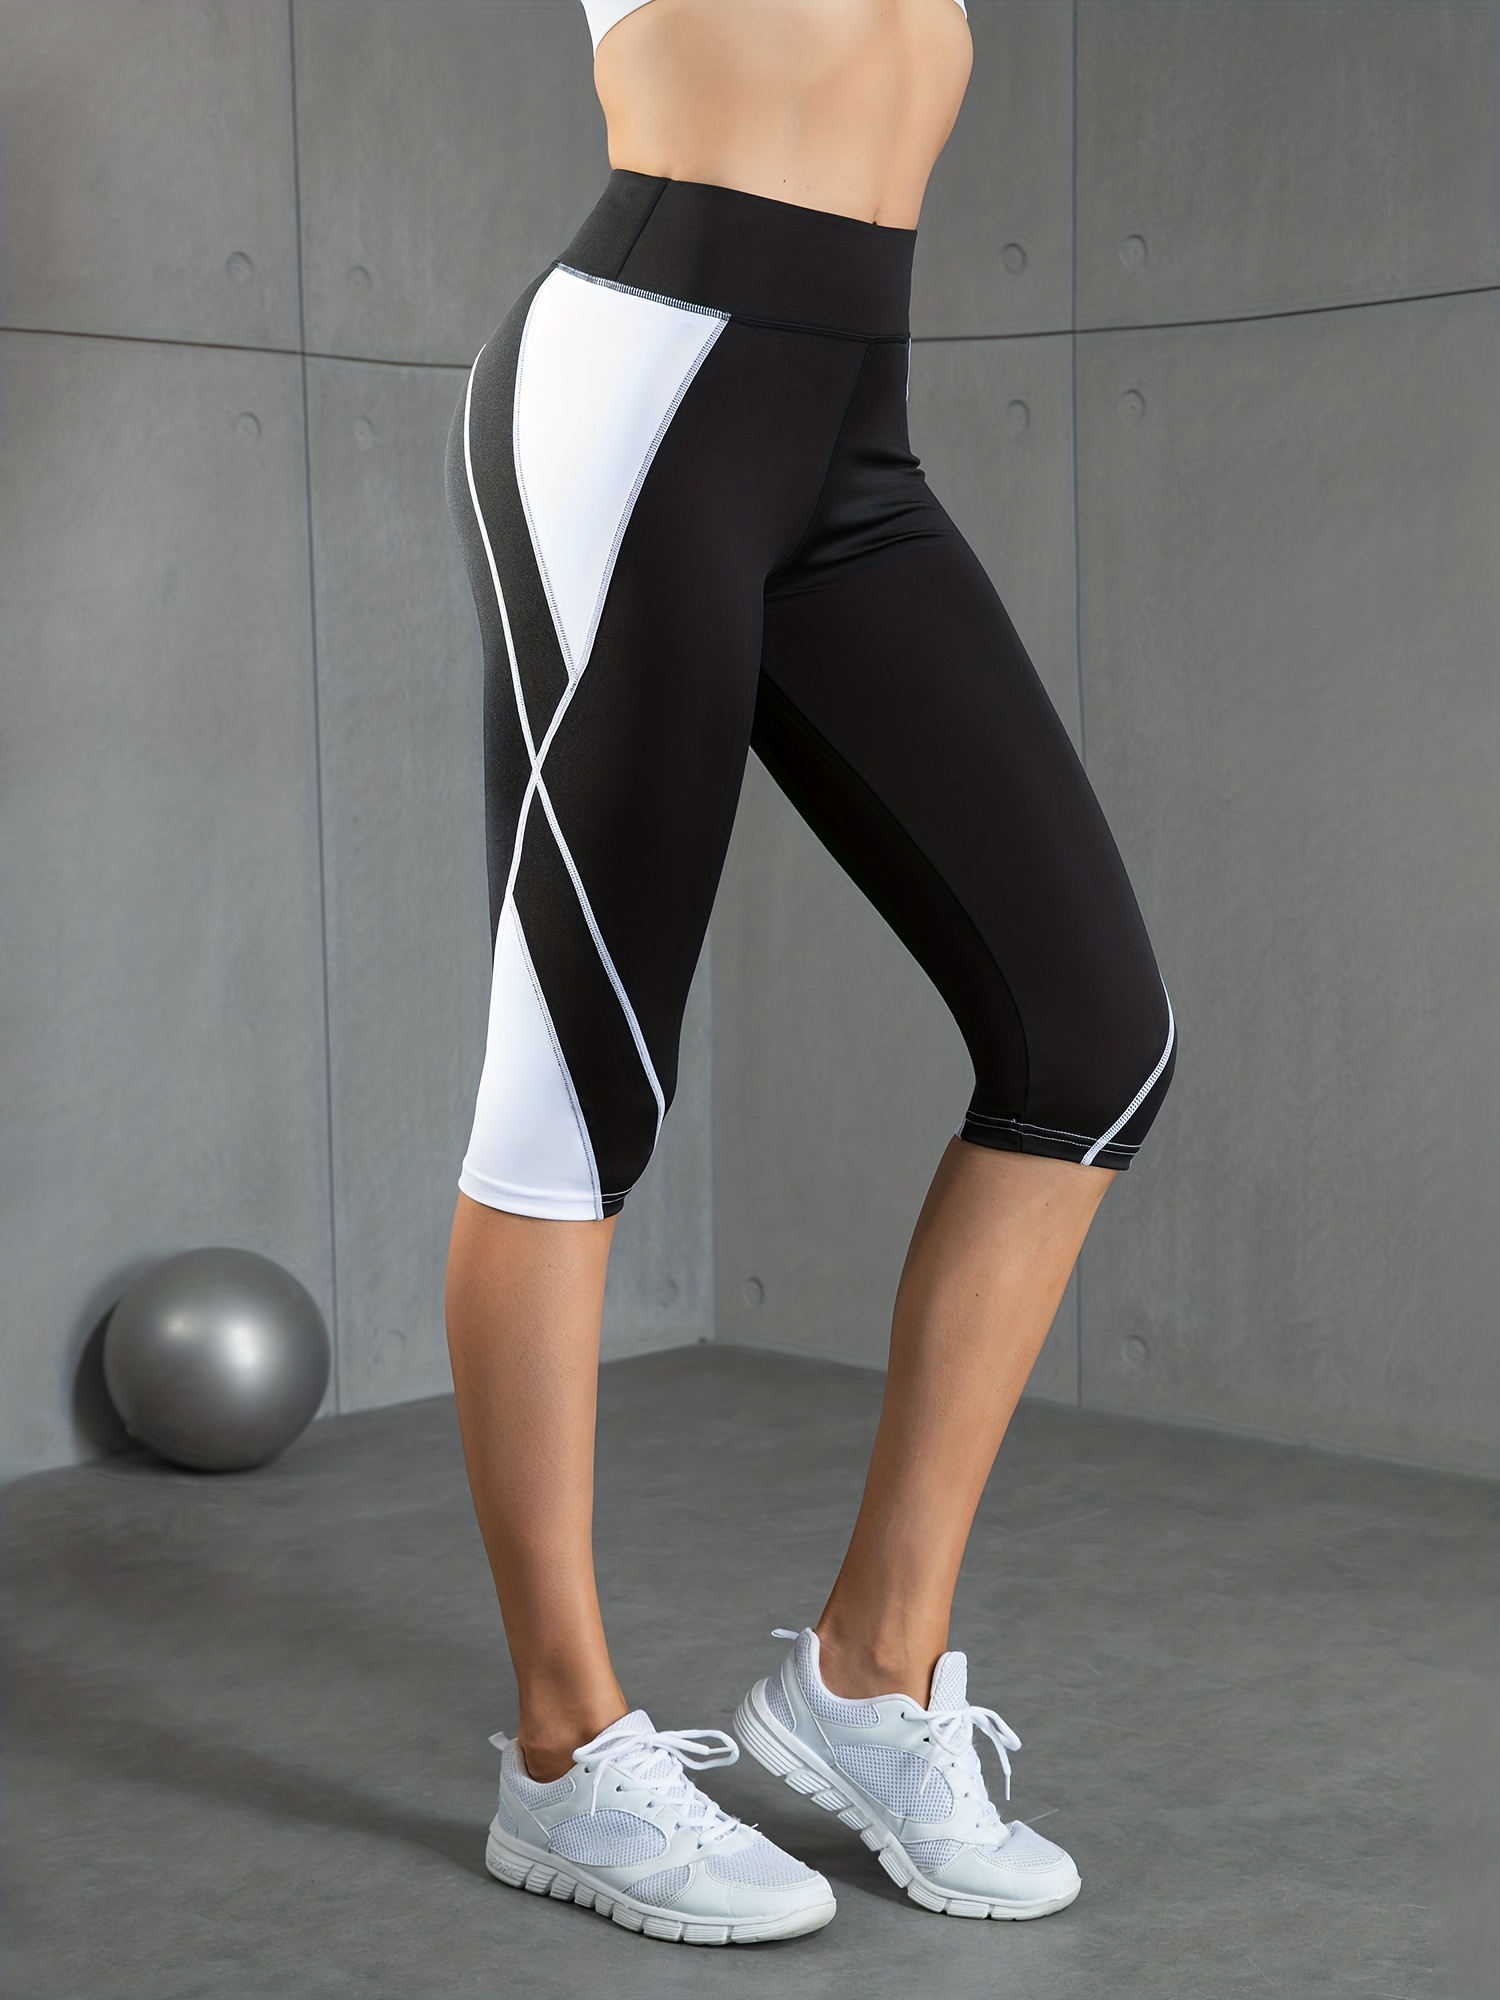 Capri Leggings for Womens Workout Running Yoga Pants High Waisted